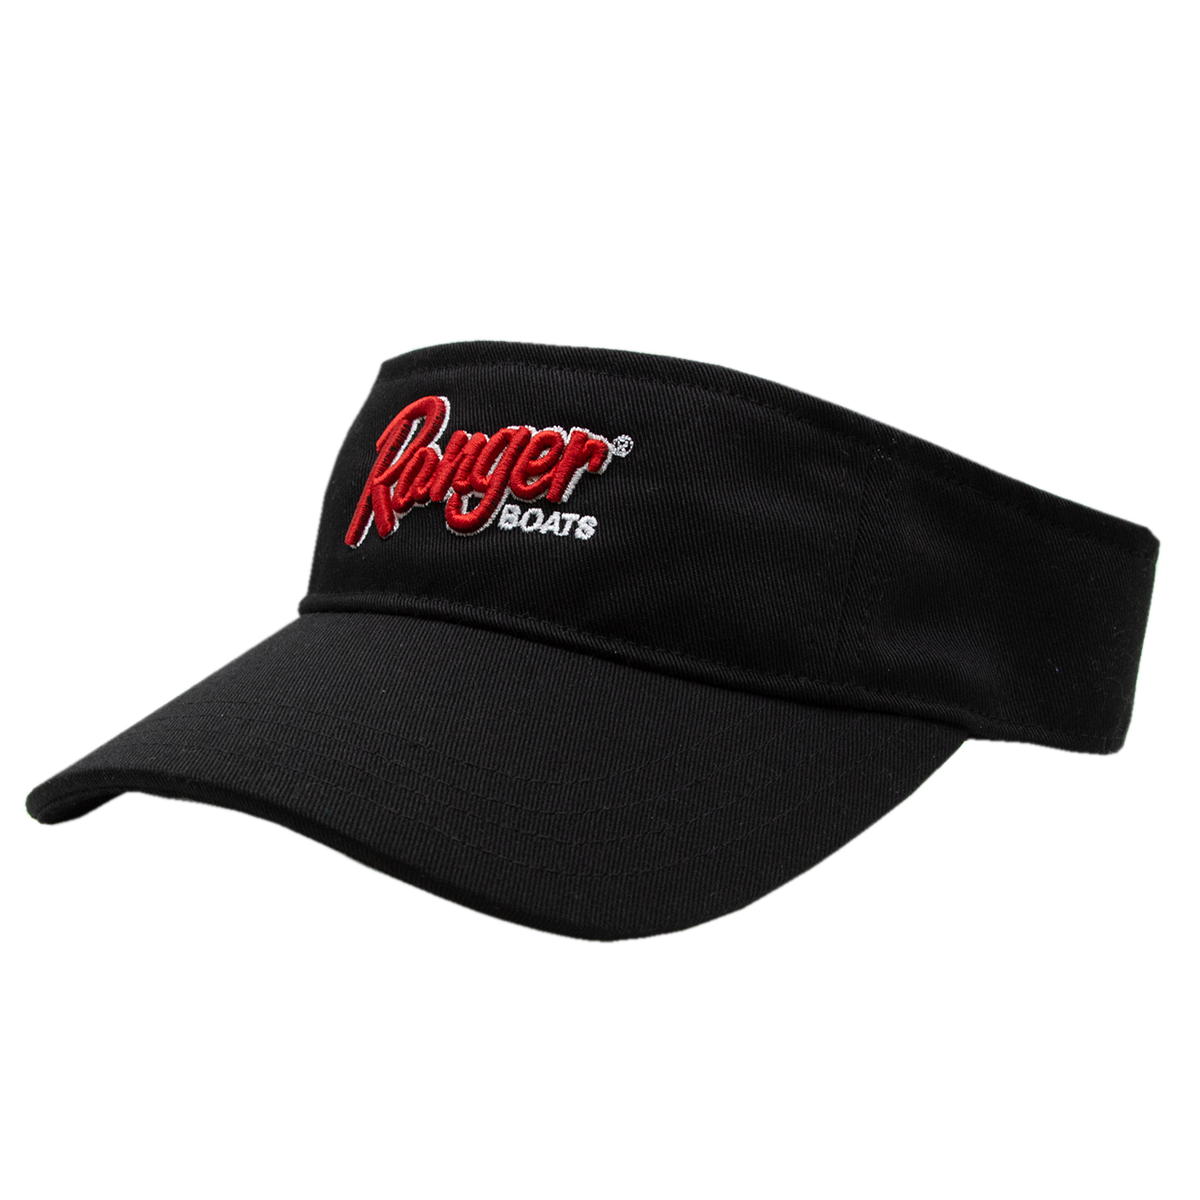 Hats RangerBoatsGear & - Accessories